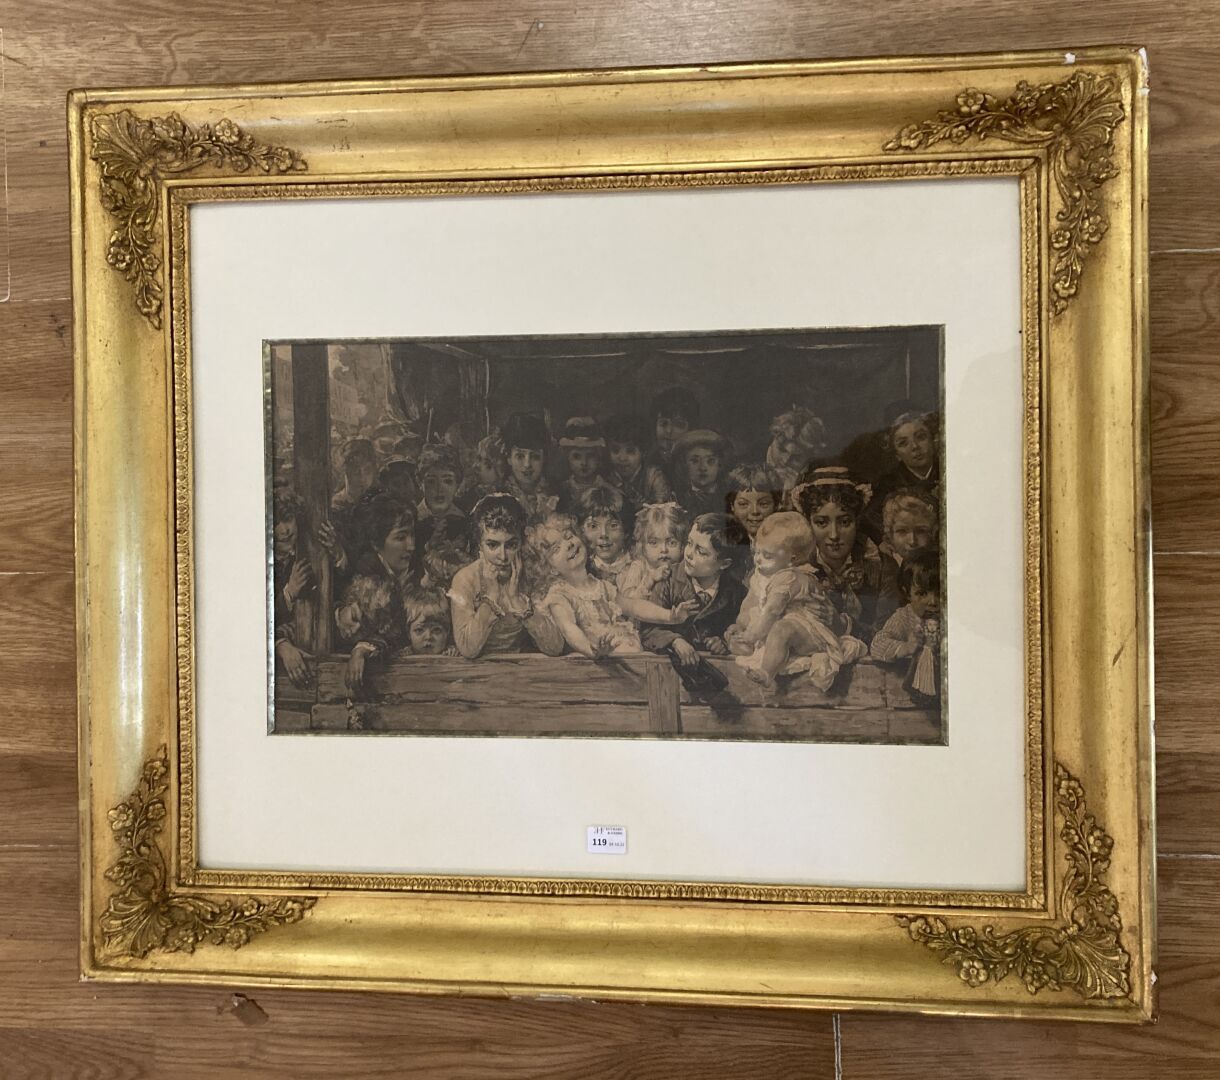 Null School of the XIXth century

The Children

Etching

26 x 44 cm

Gilded fram&hellip;